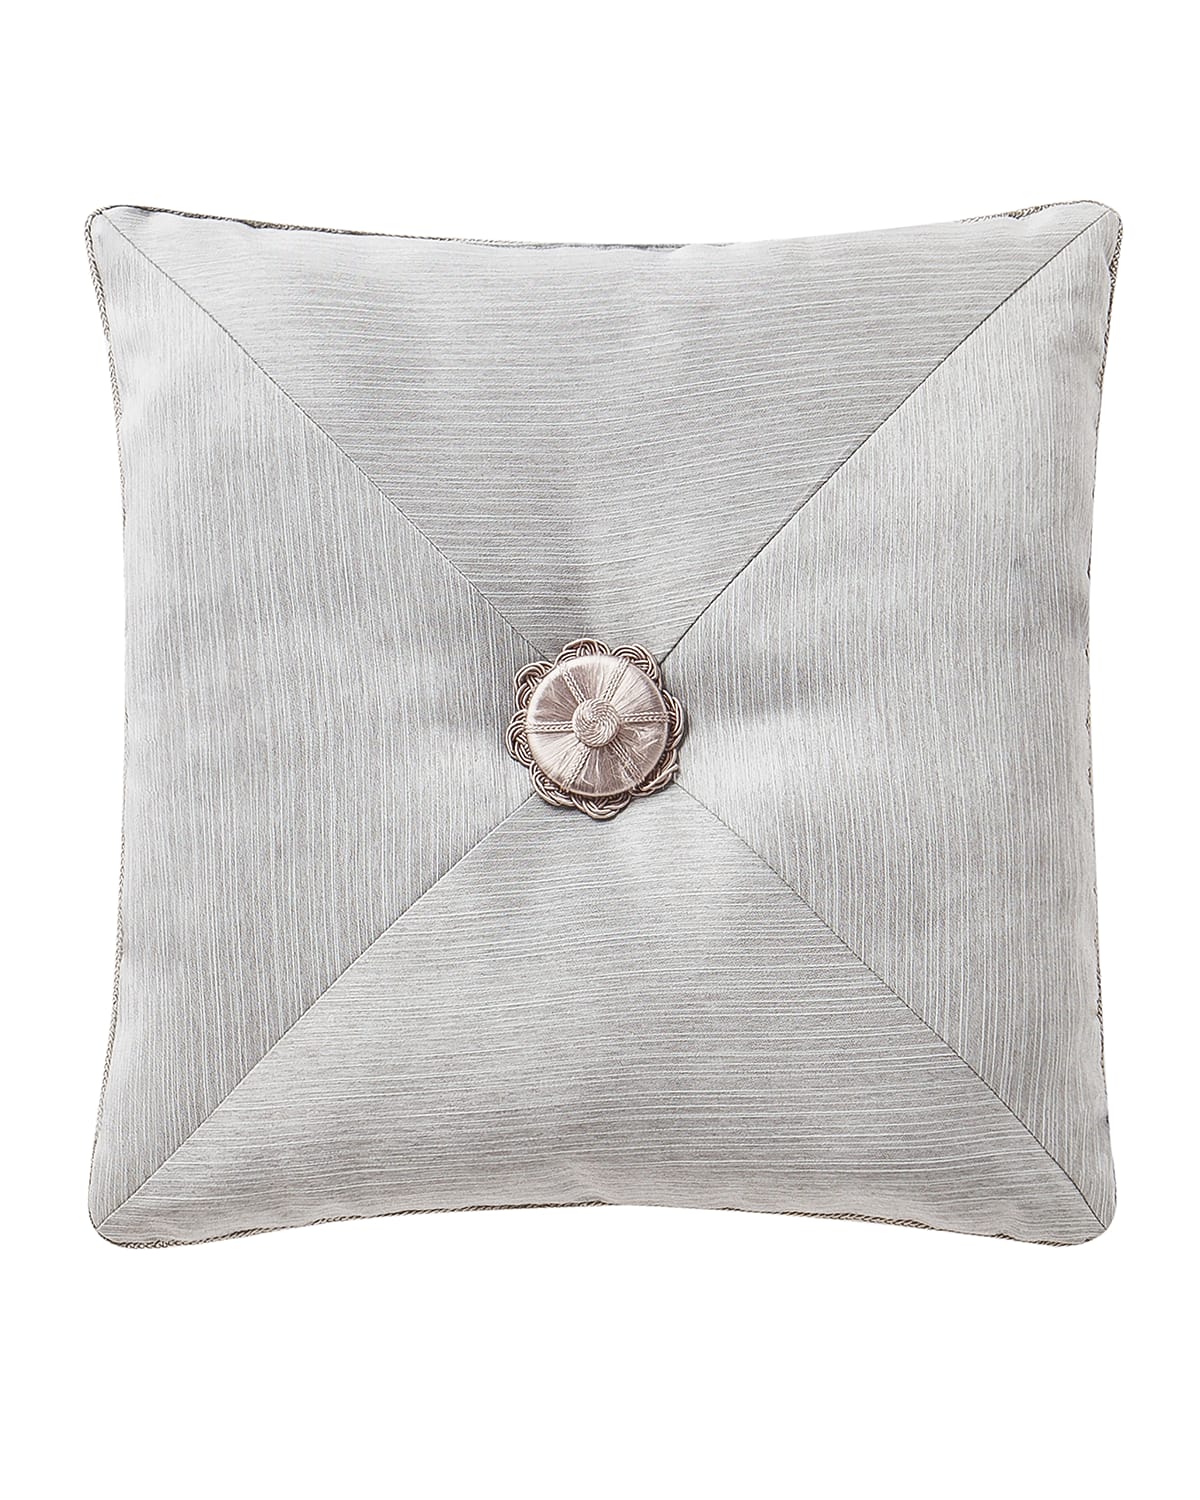 Image Waterford Farrah Square Decorative Pillow, 18"Sq.